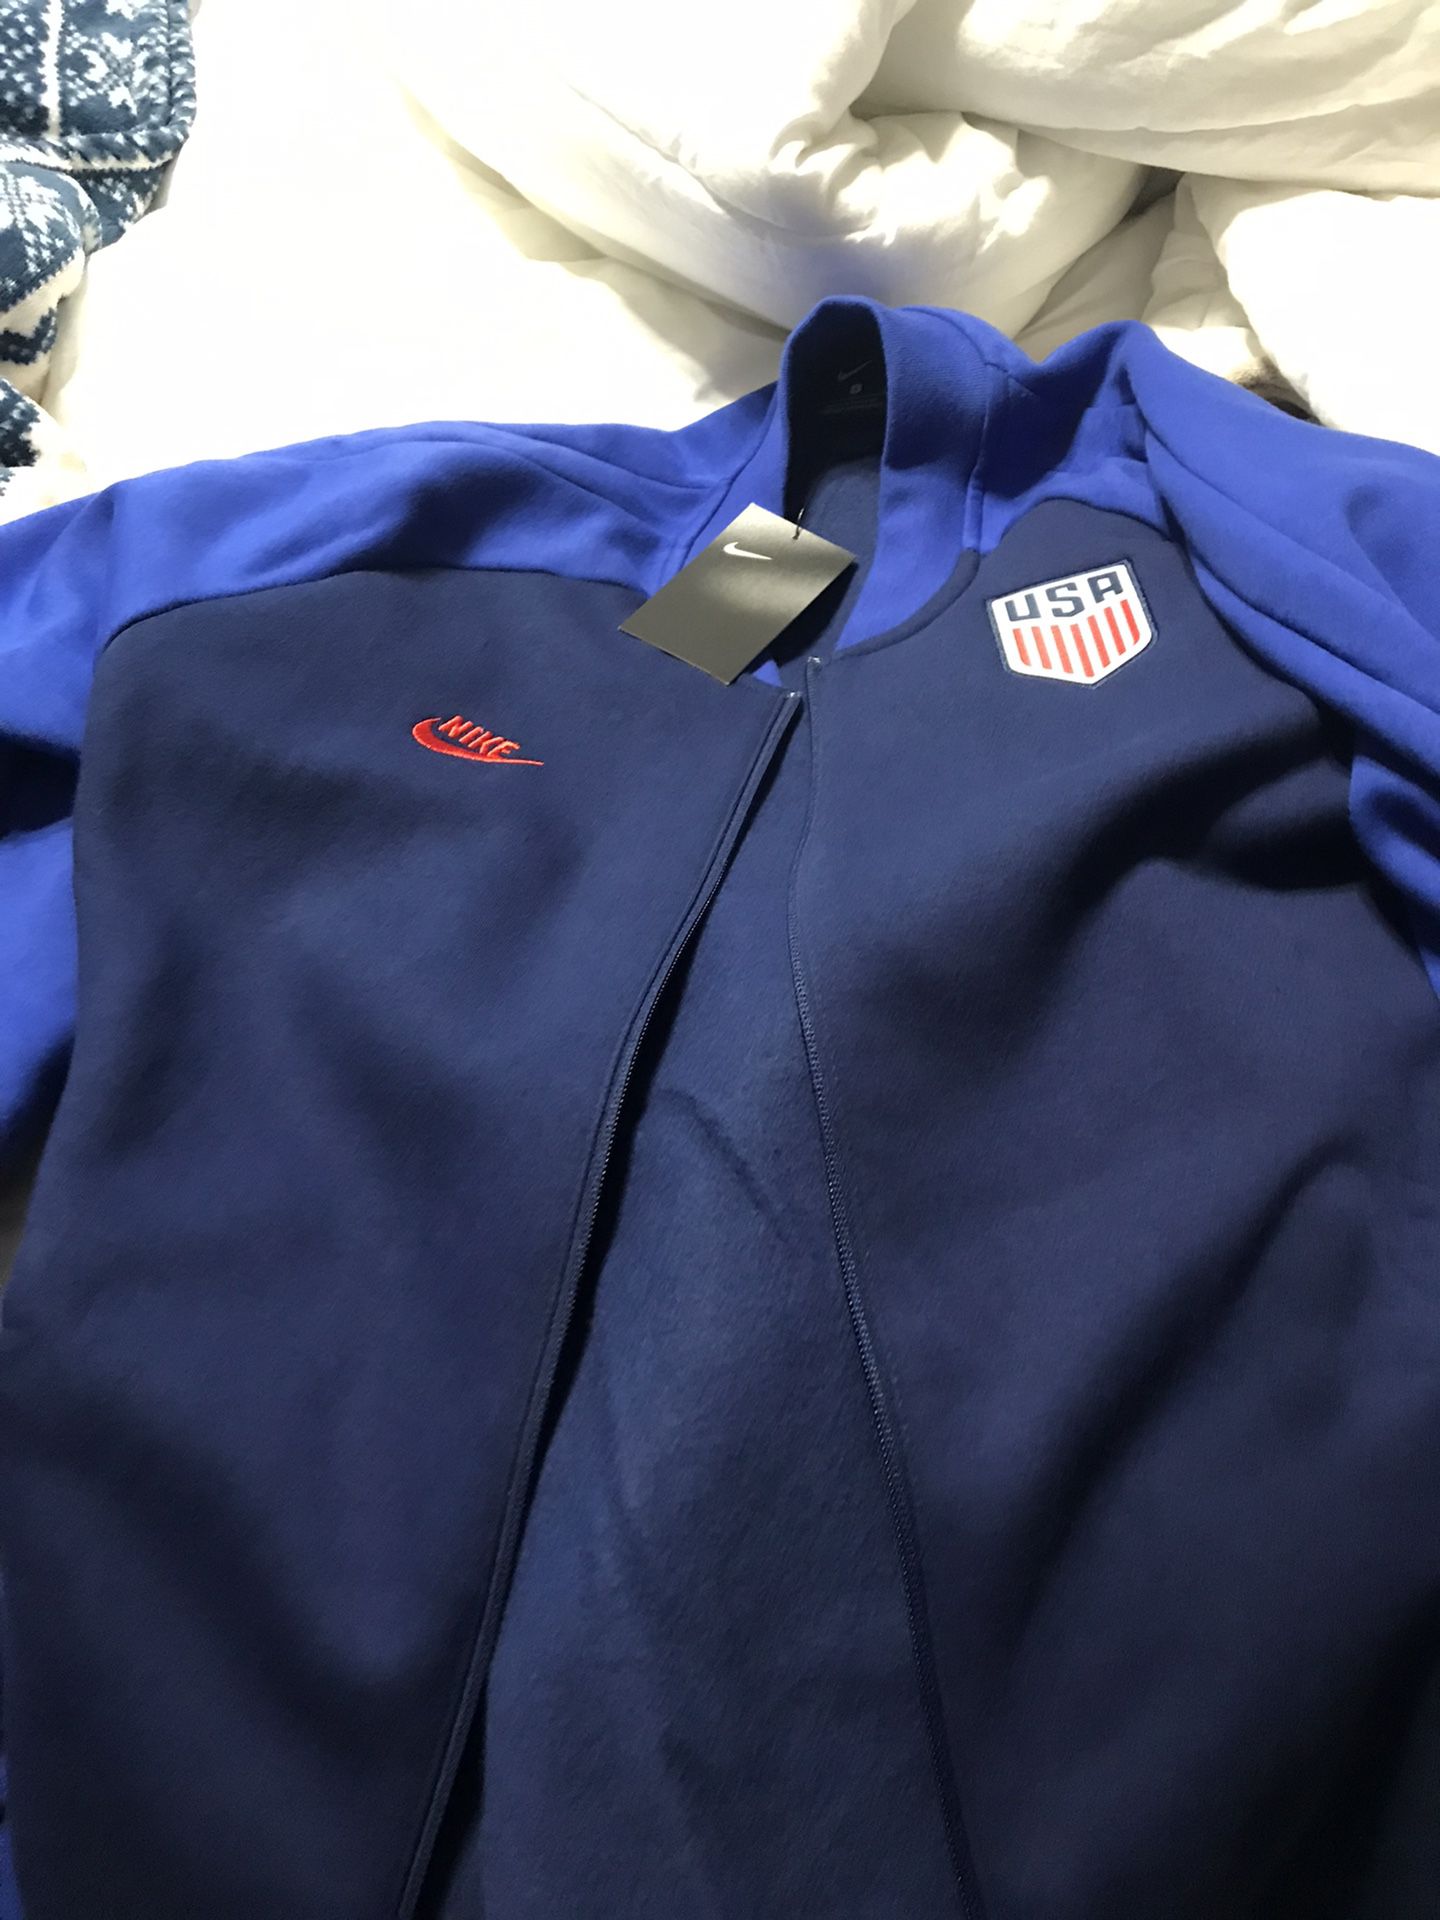 New Nike USA Jacket